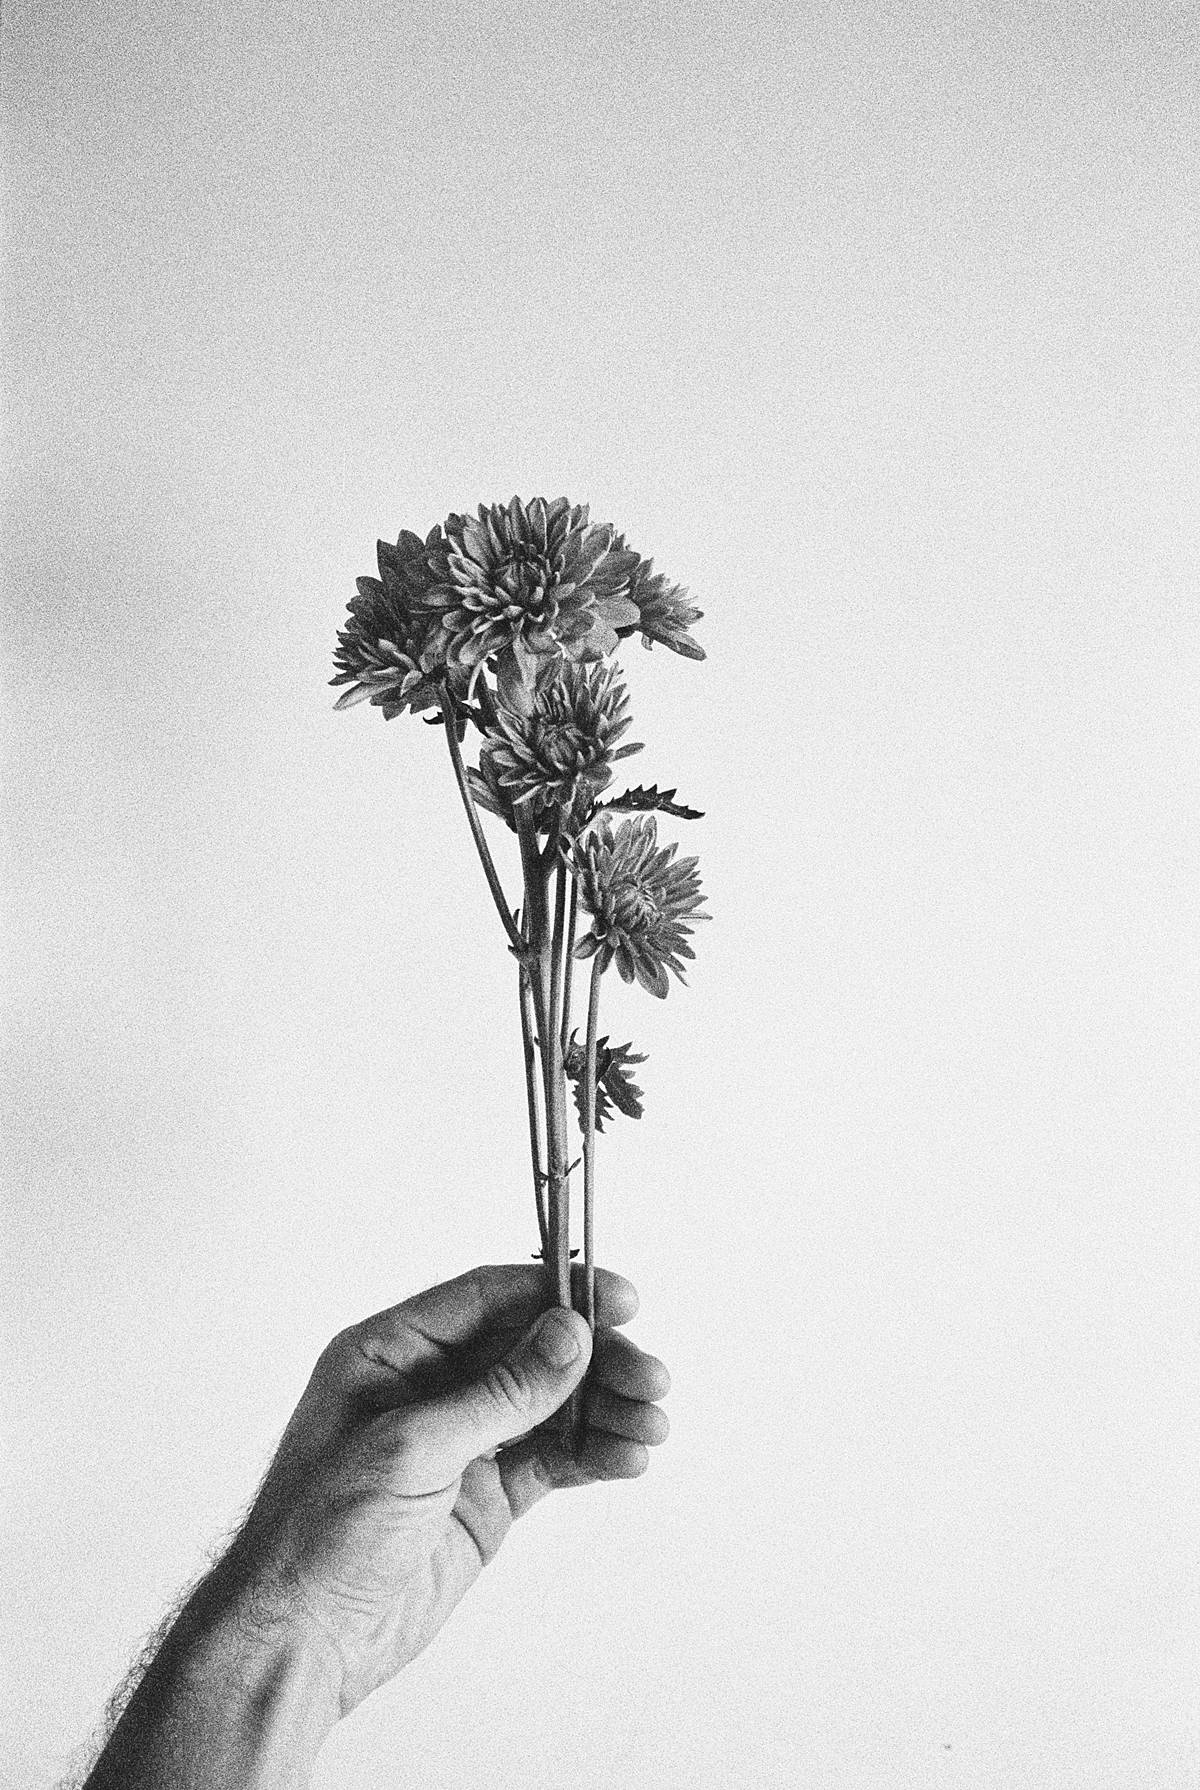 studio sixty reid charleston south carolina traverse city michigan portrait photography studio black and white hand holding flowers